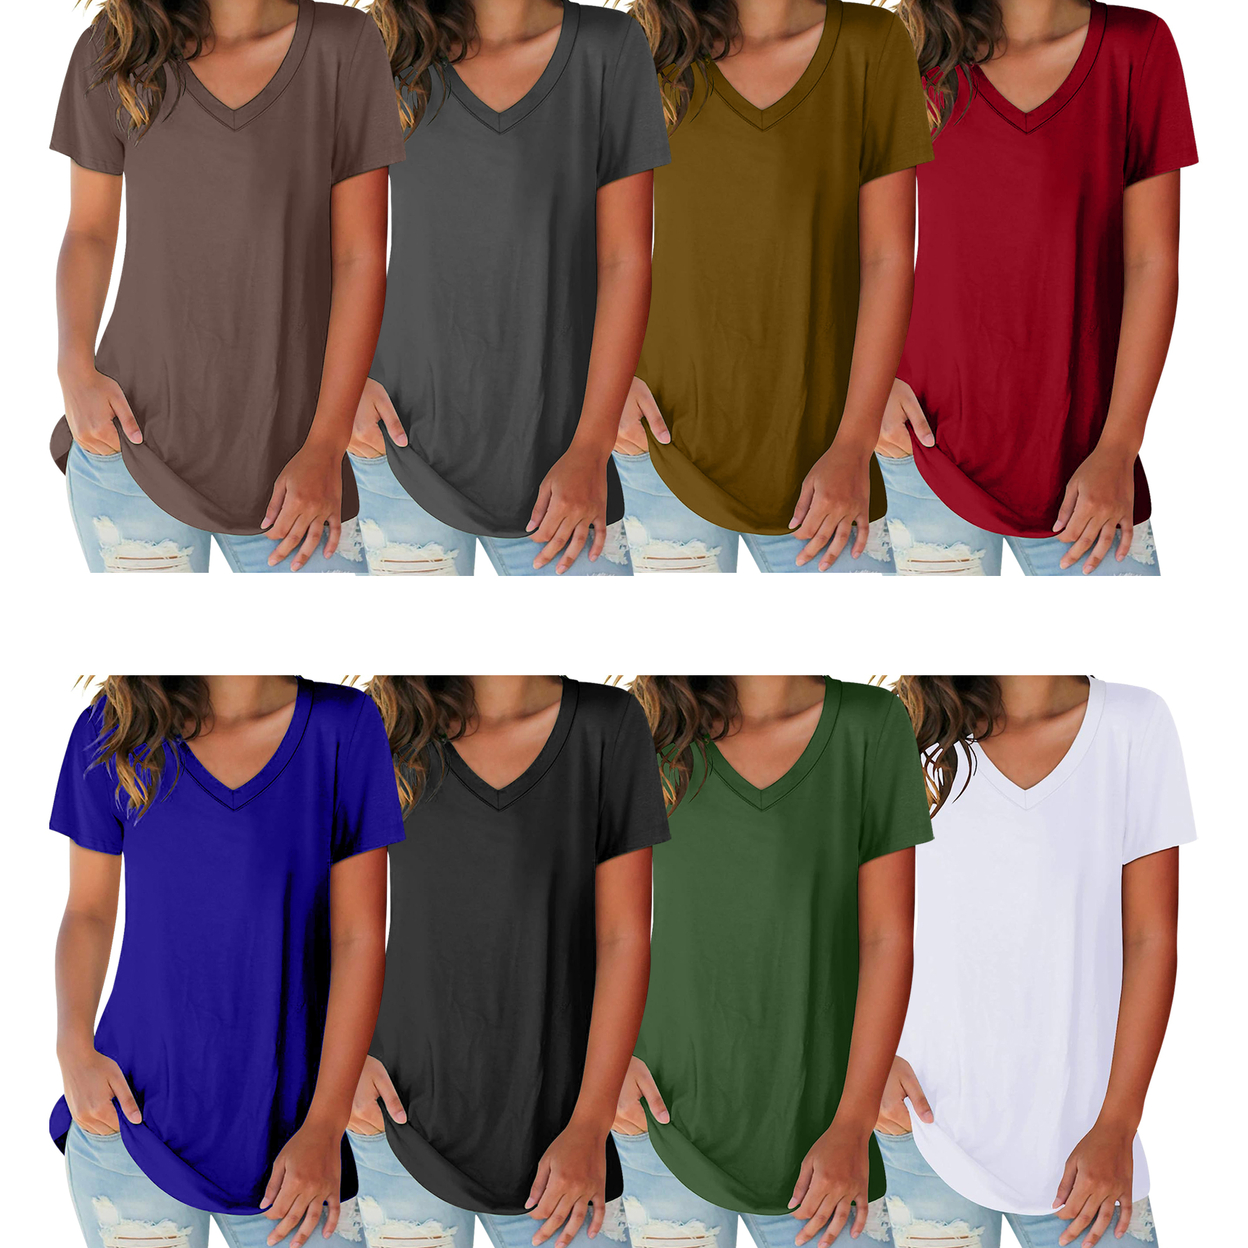 2-Pack: Women's Ultra Soft Smooth Cotton Blend Basic V-Neck Short Sleeve Shirts - Black & Mustard, Medium